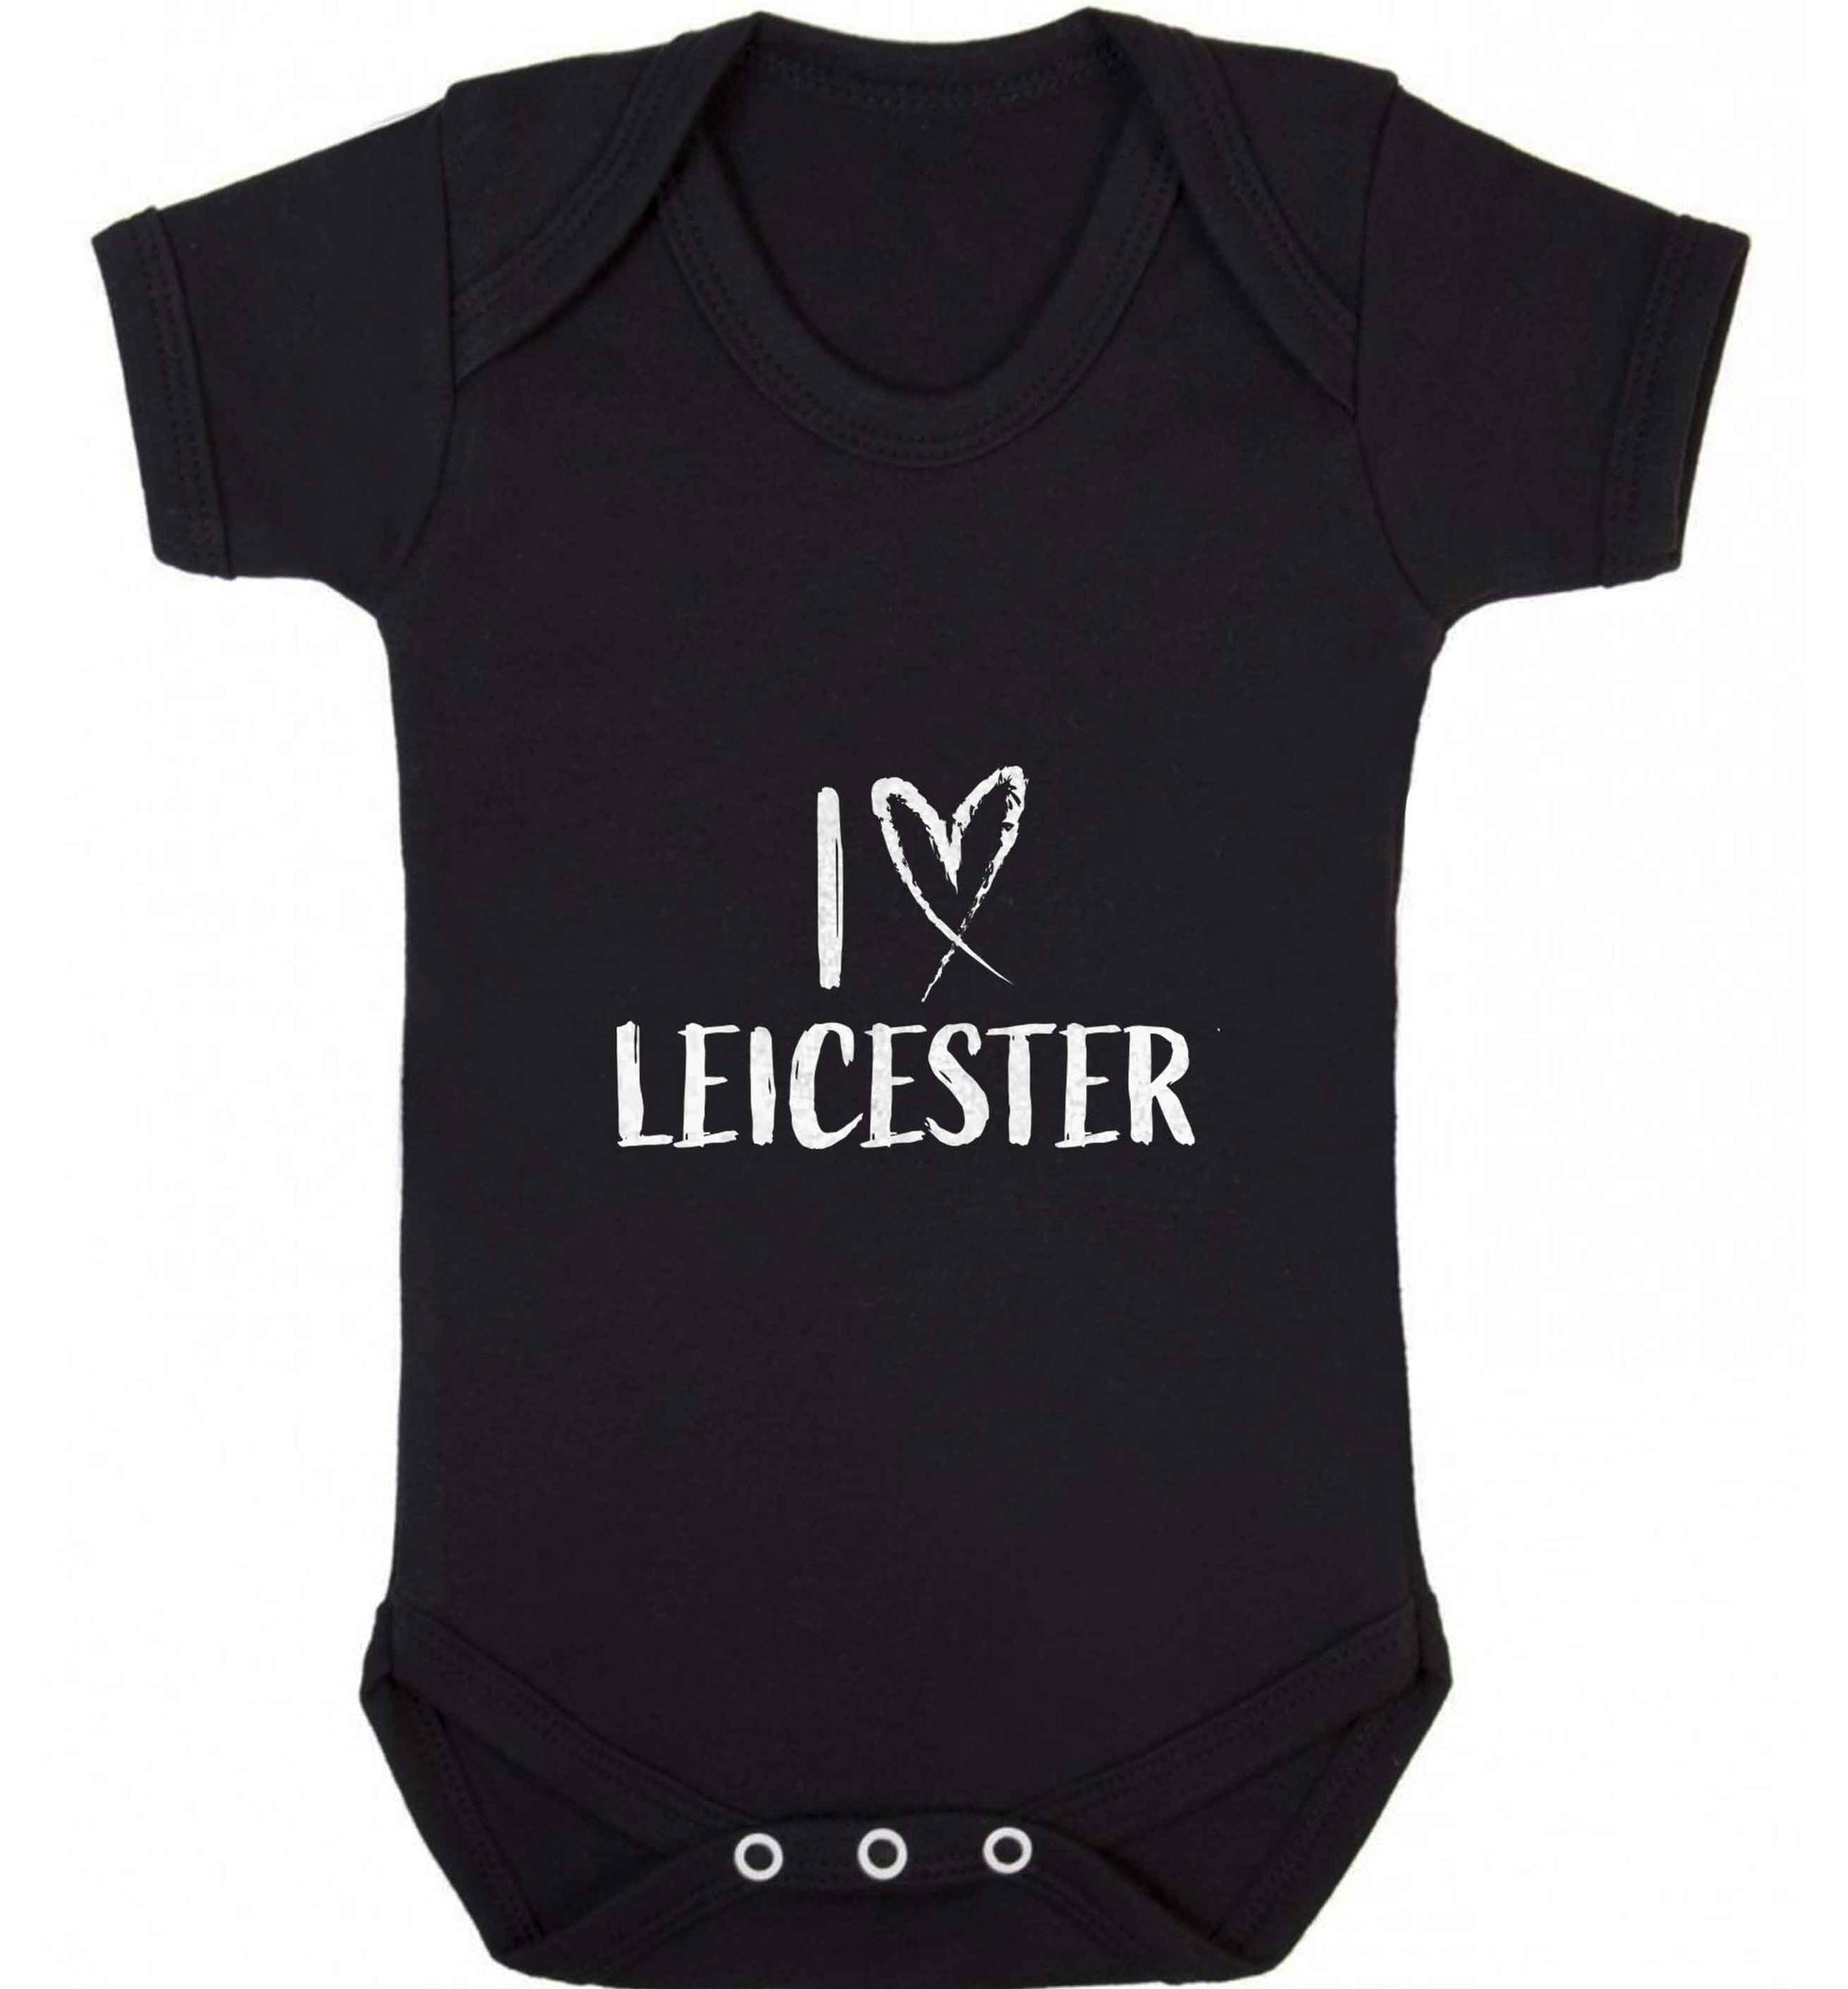 I love Leicester baby vest black 18-24 months